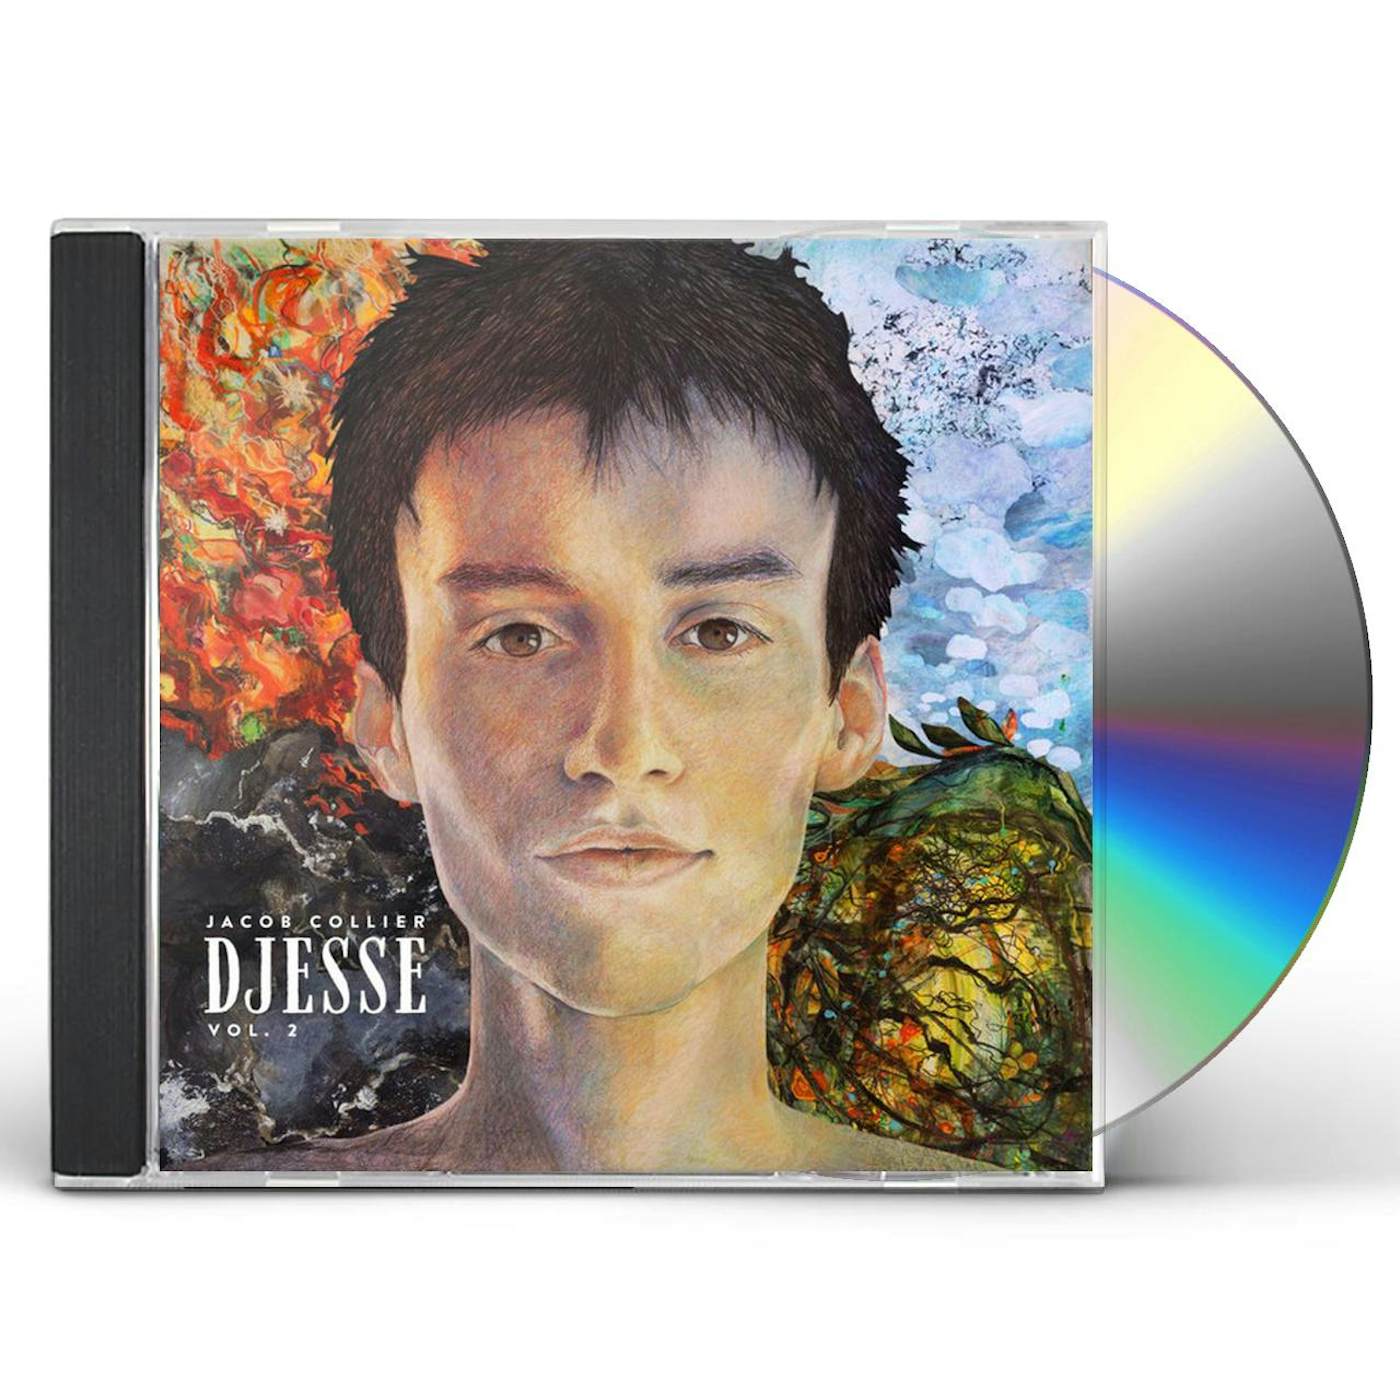 Jacob Collier DJESSE VOL 2 CD